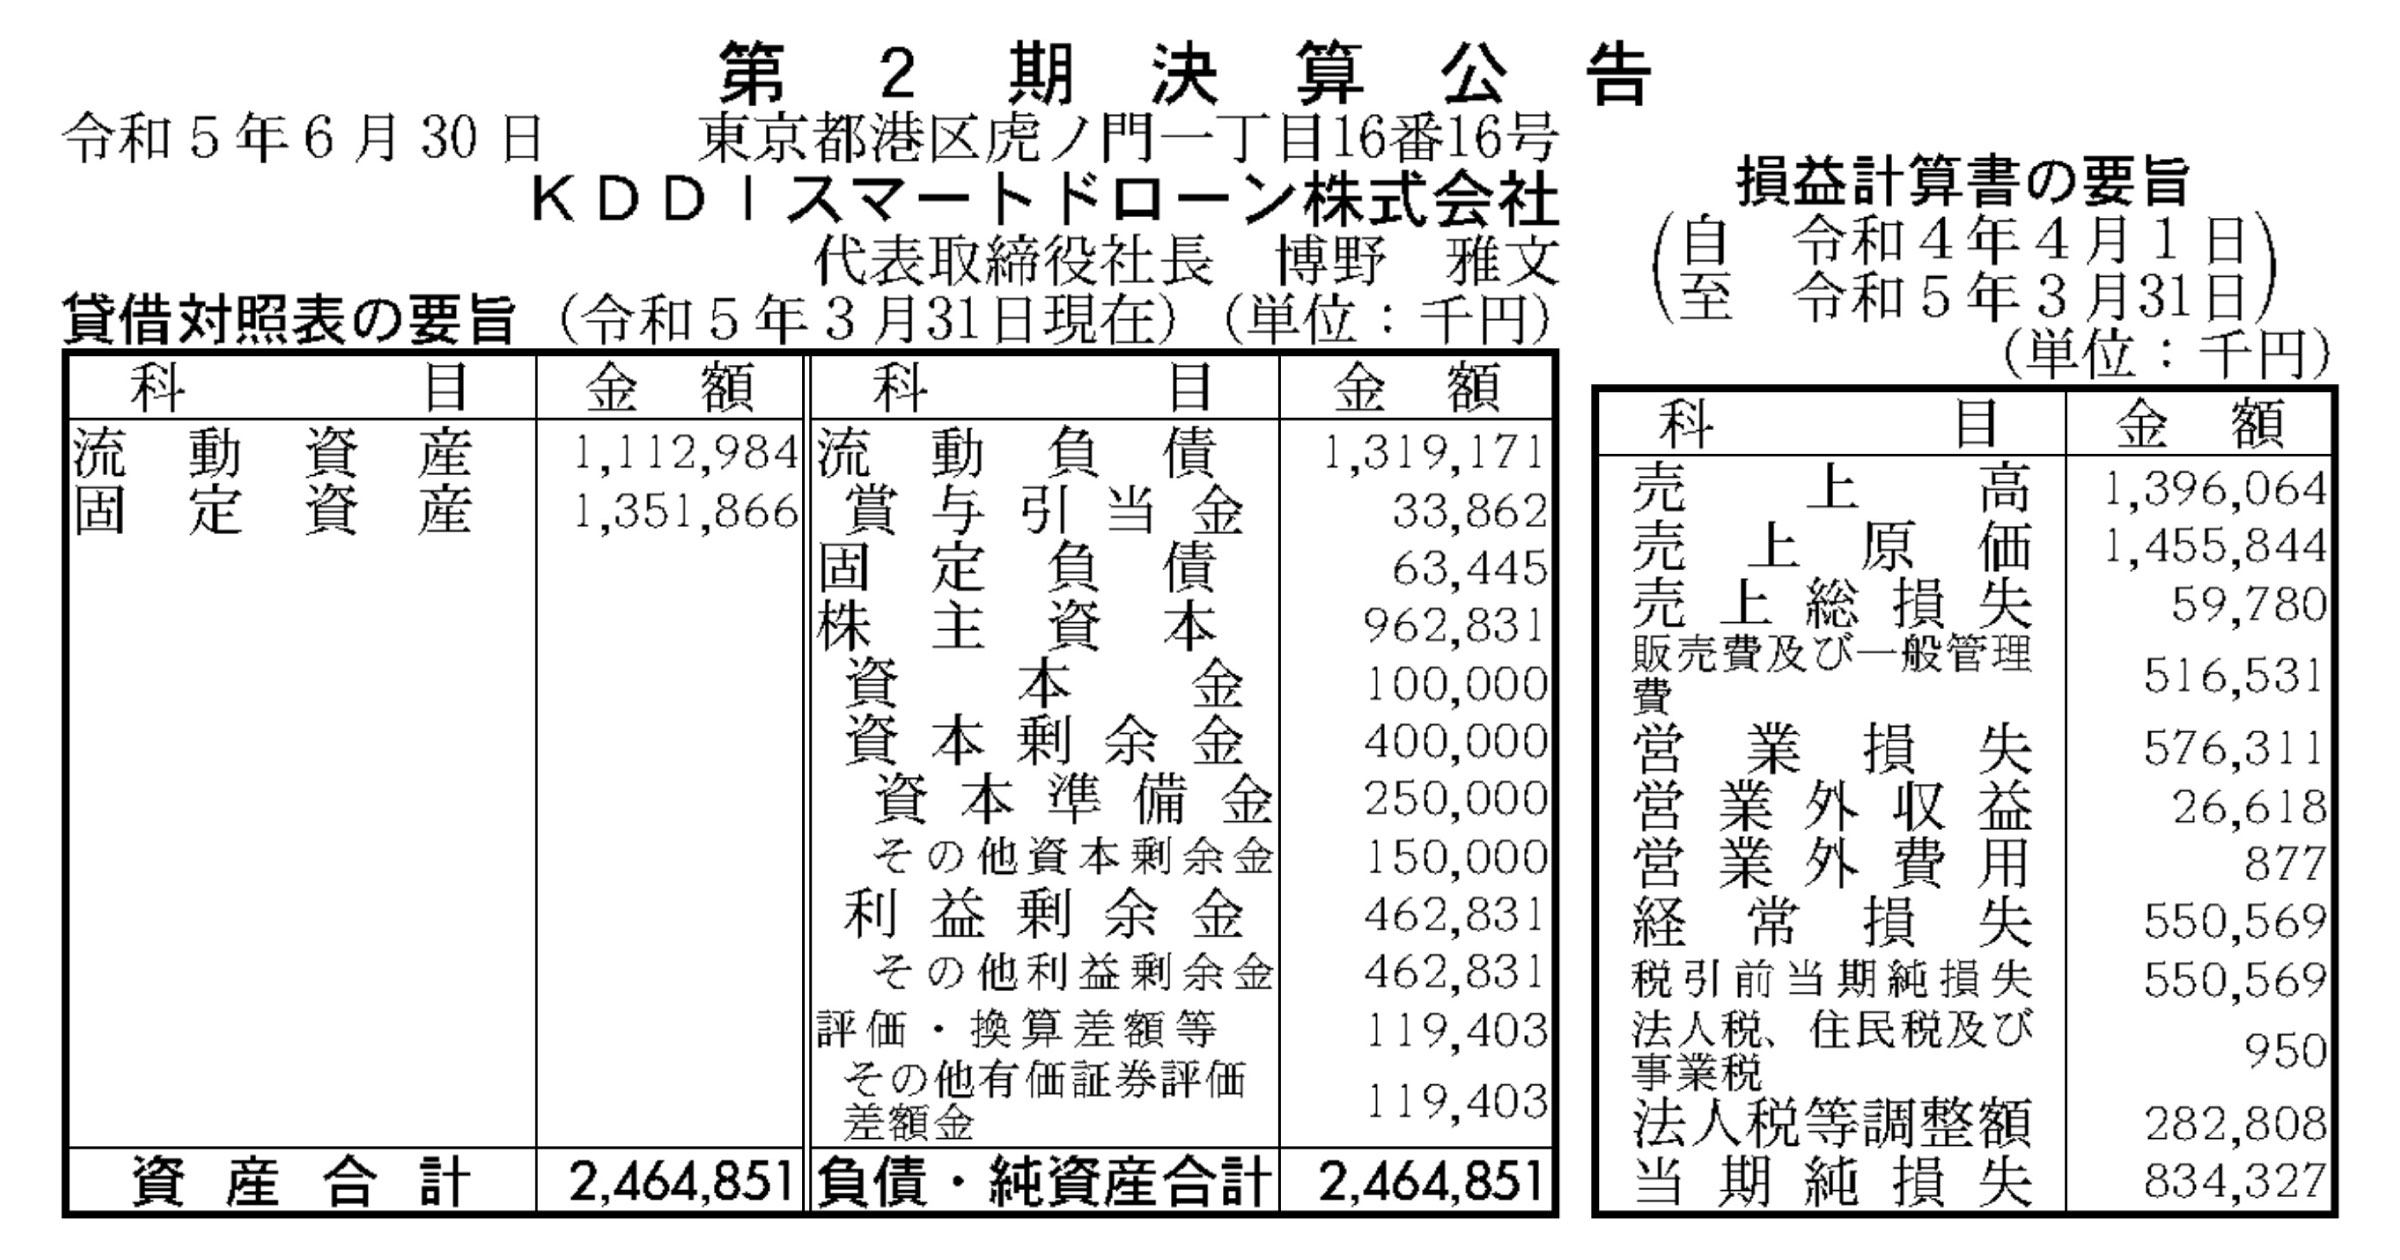 KDDIスマートドローン決算、純損失8.3億円　売上は13億円計上